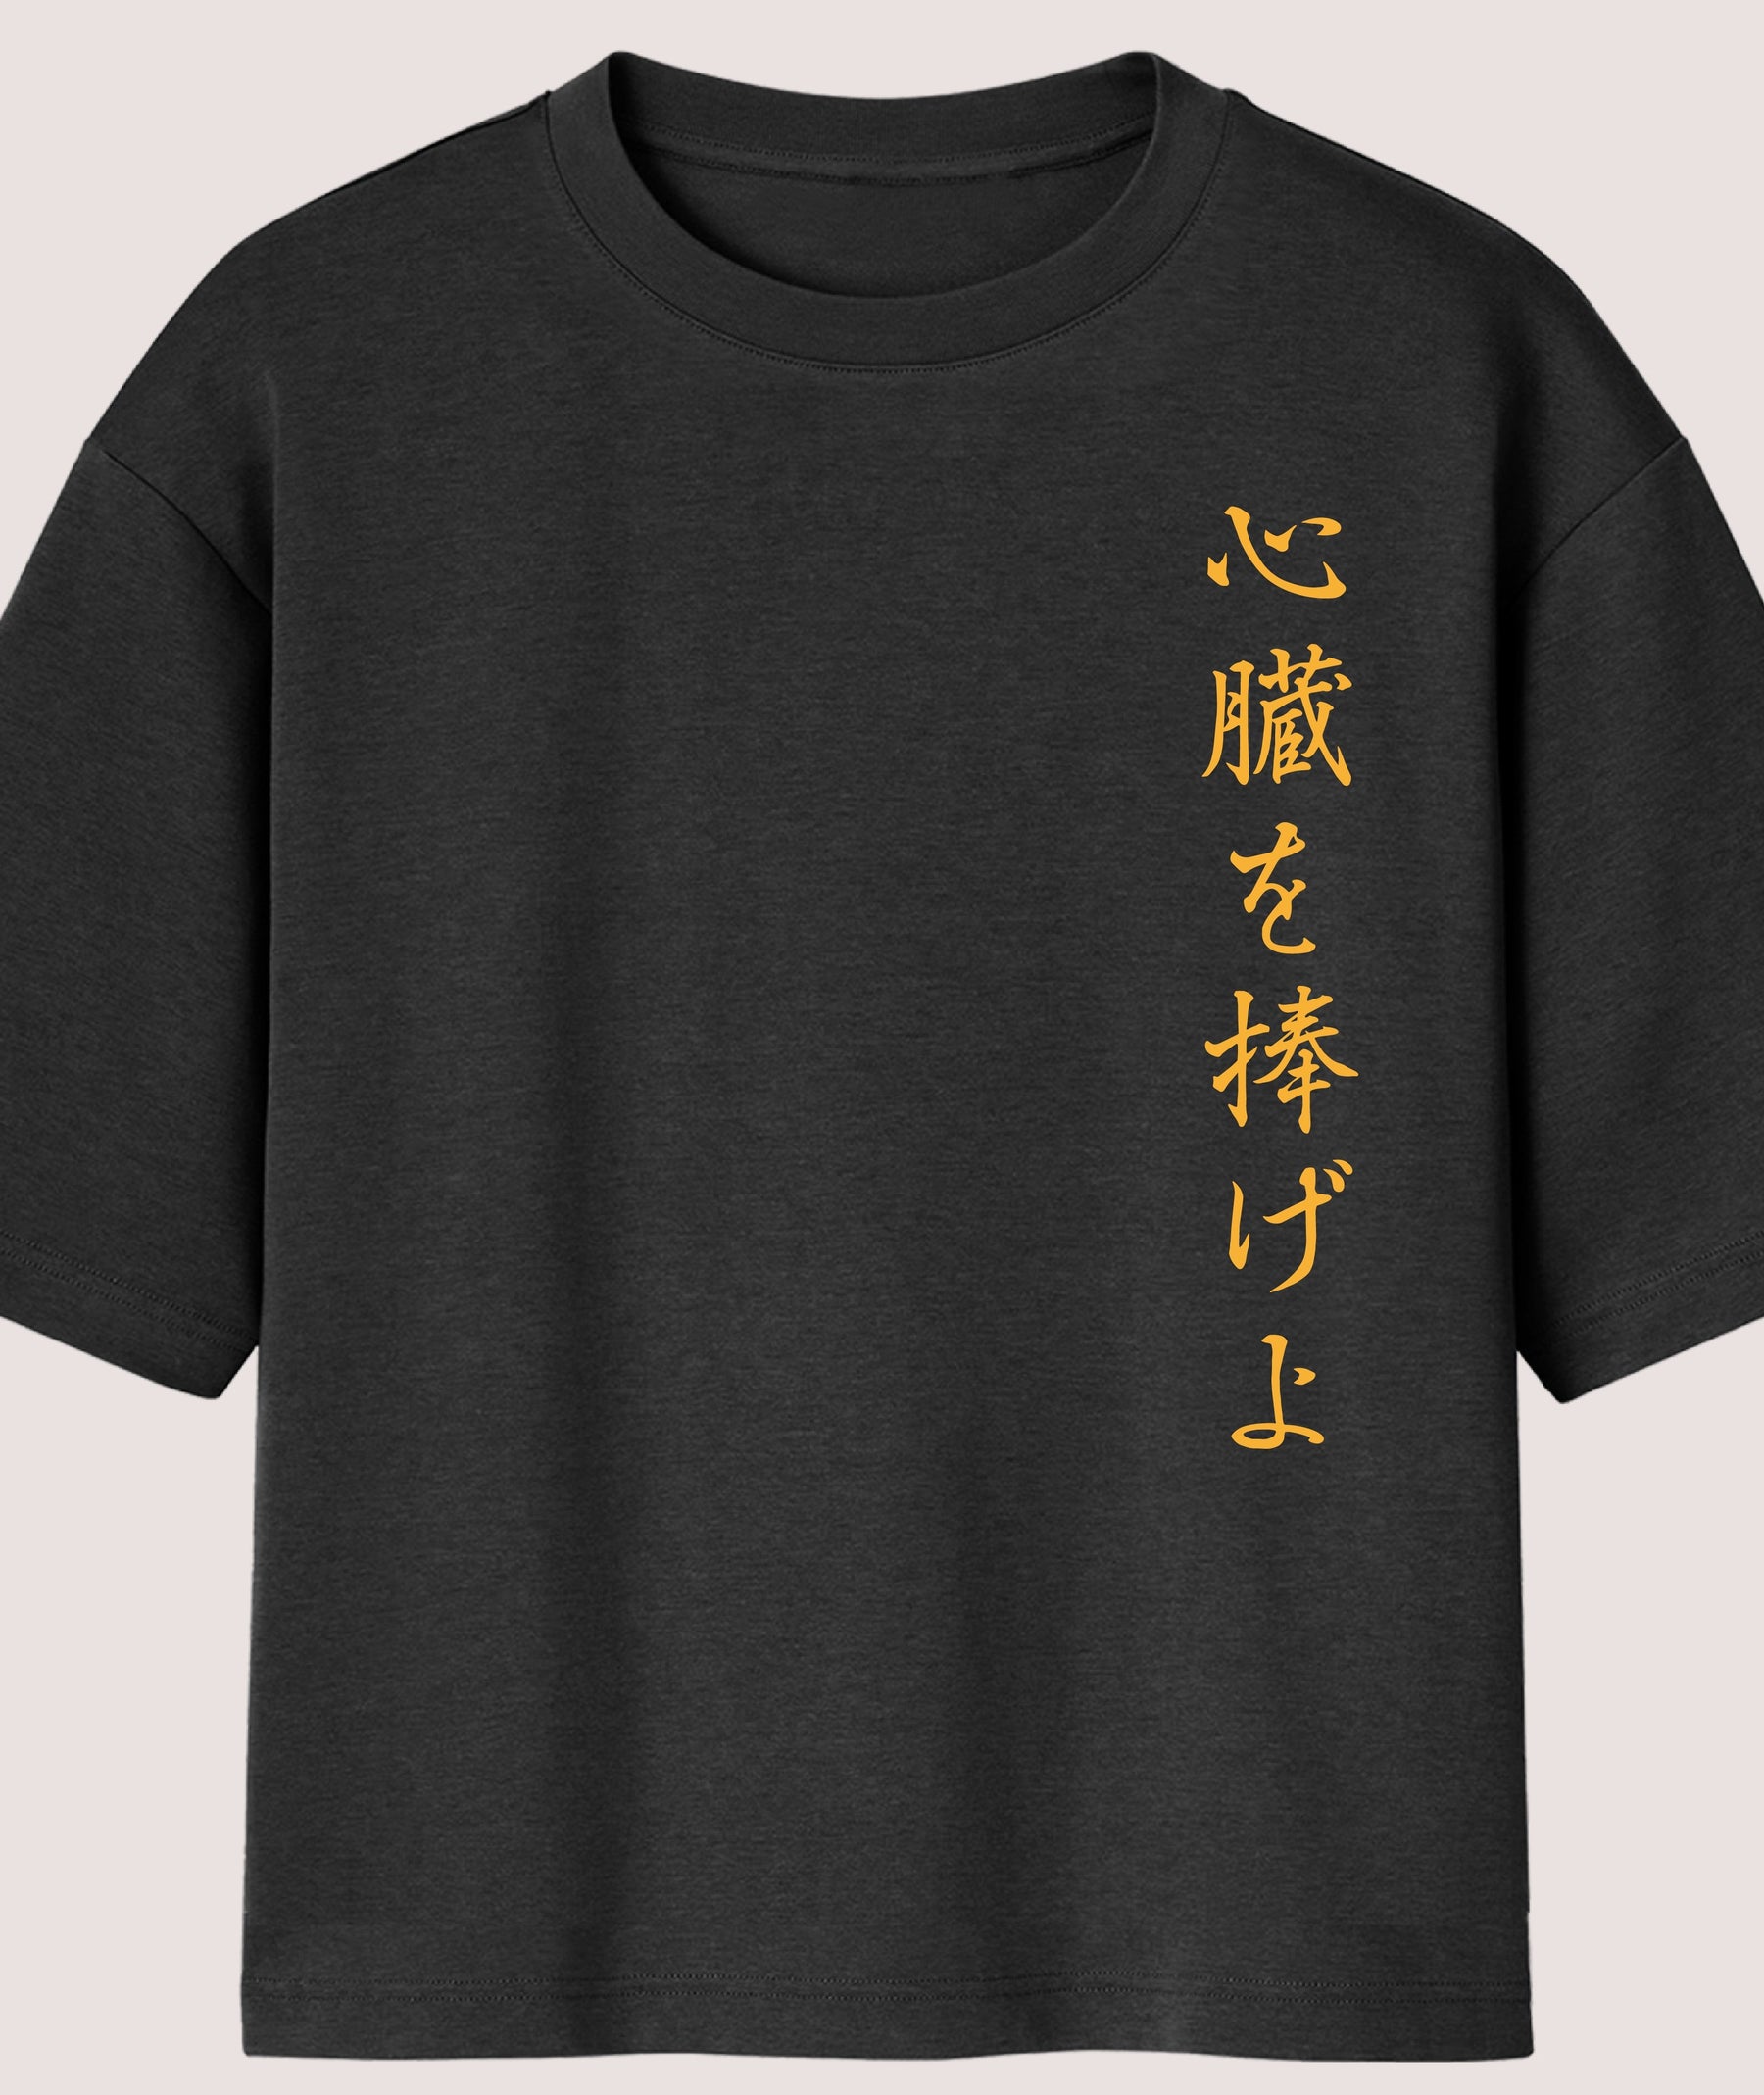 Jaw Titan Oversized Anime T-shirt